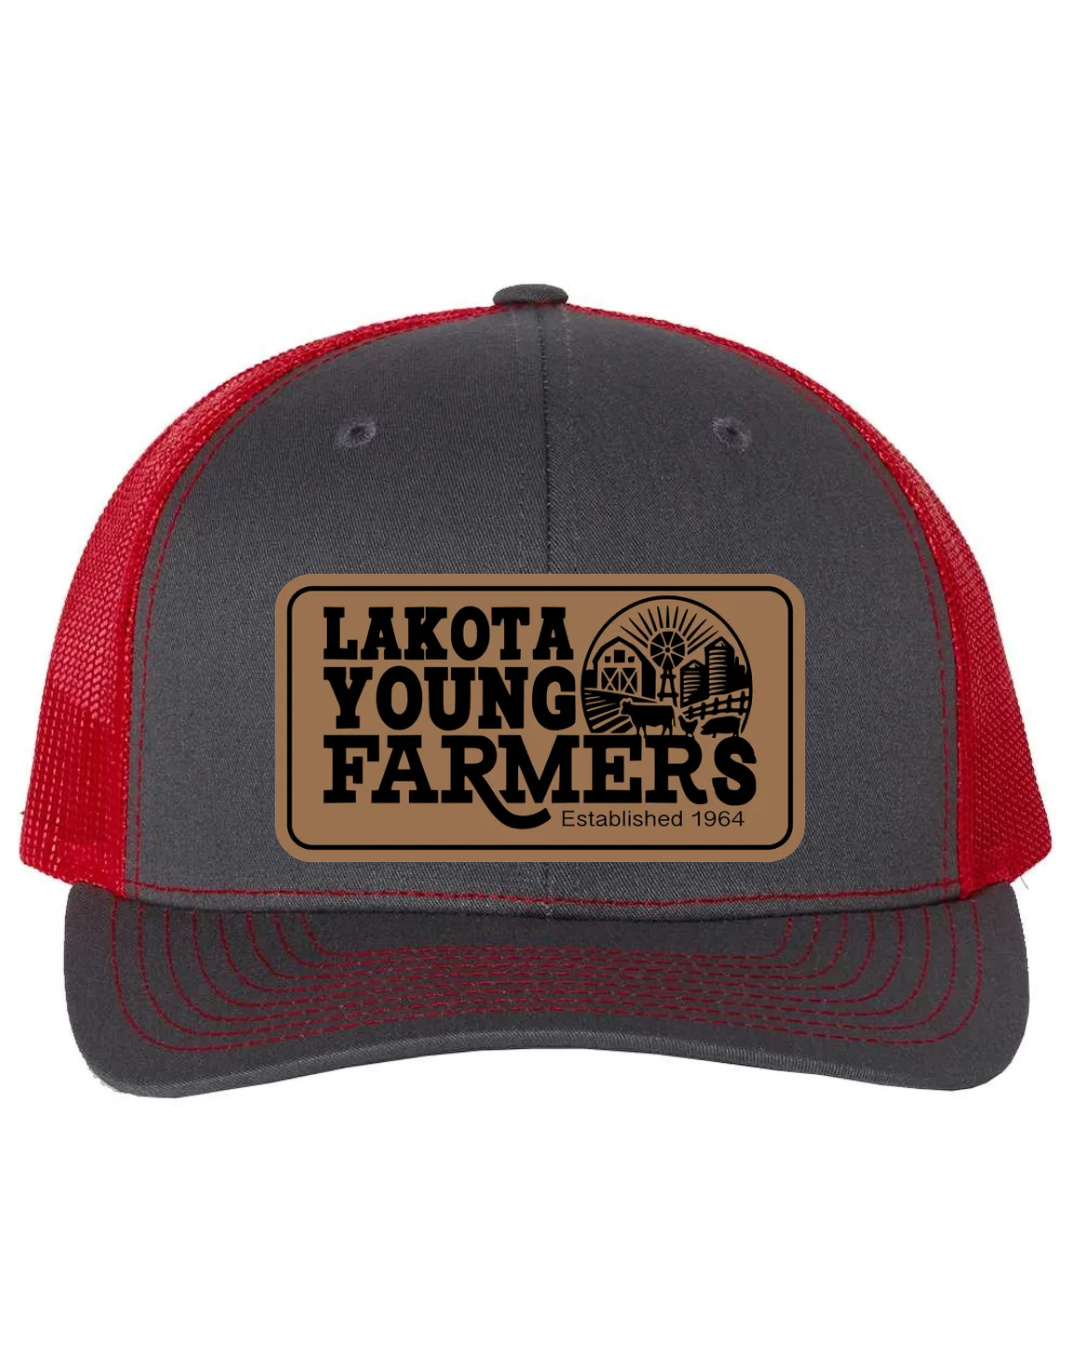 LYF Leather Patch Richardson 112 Trucker Hat